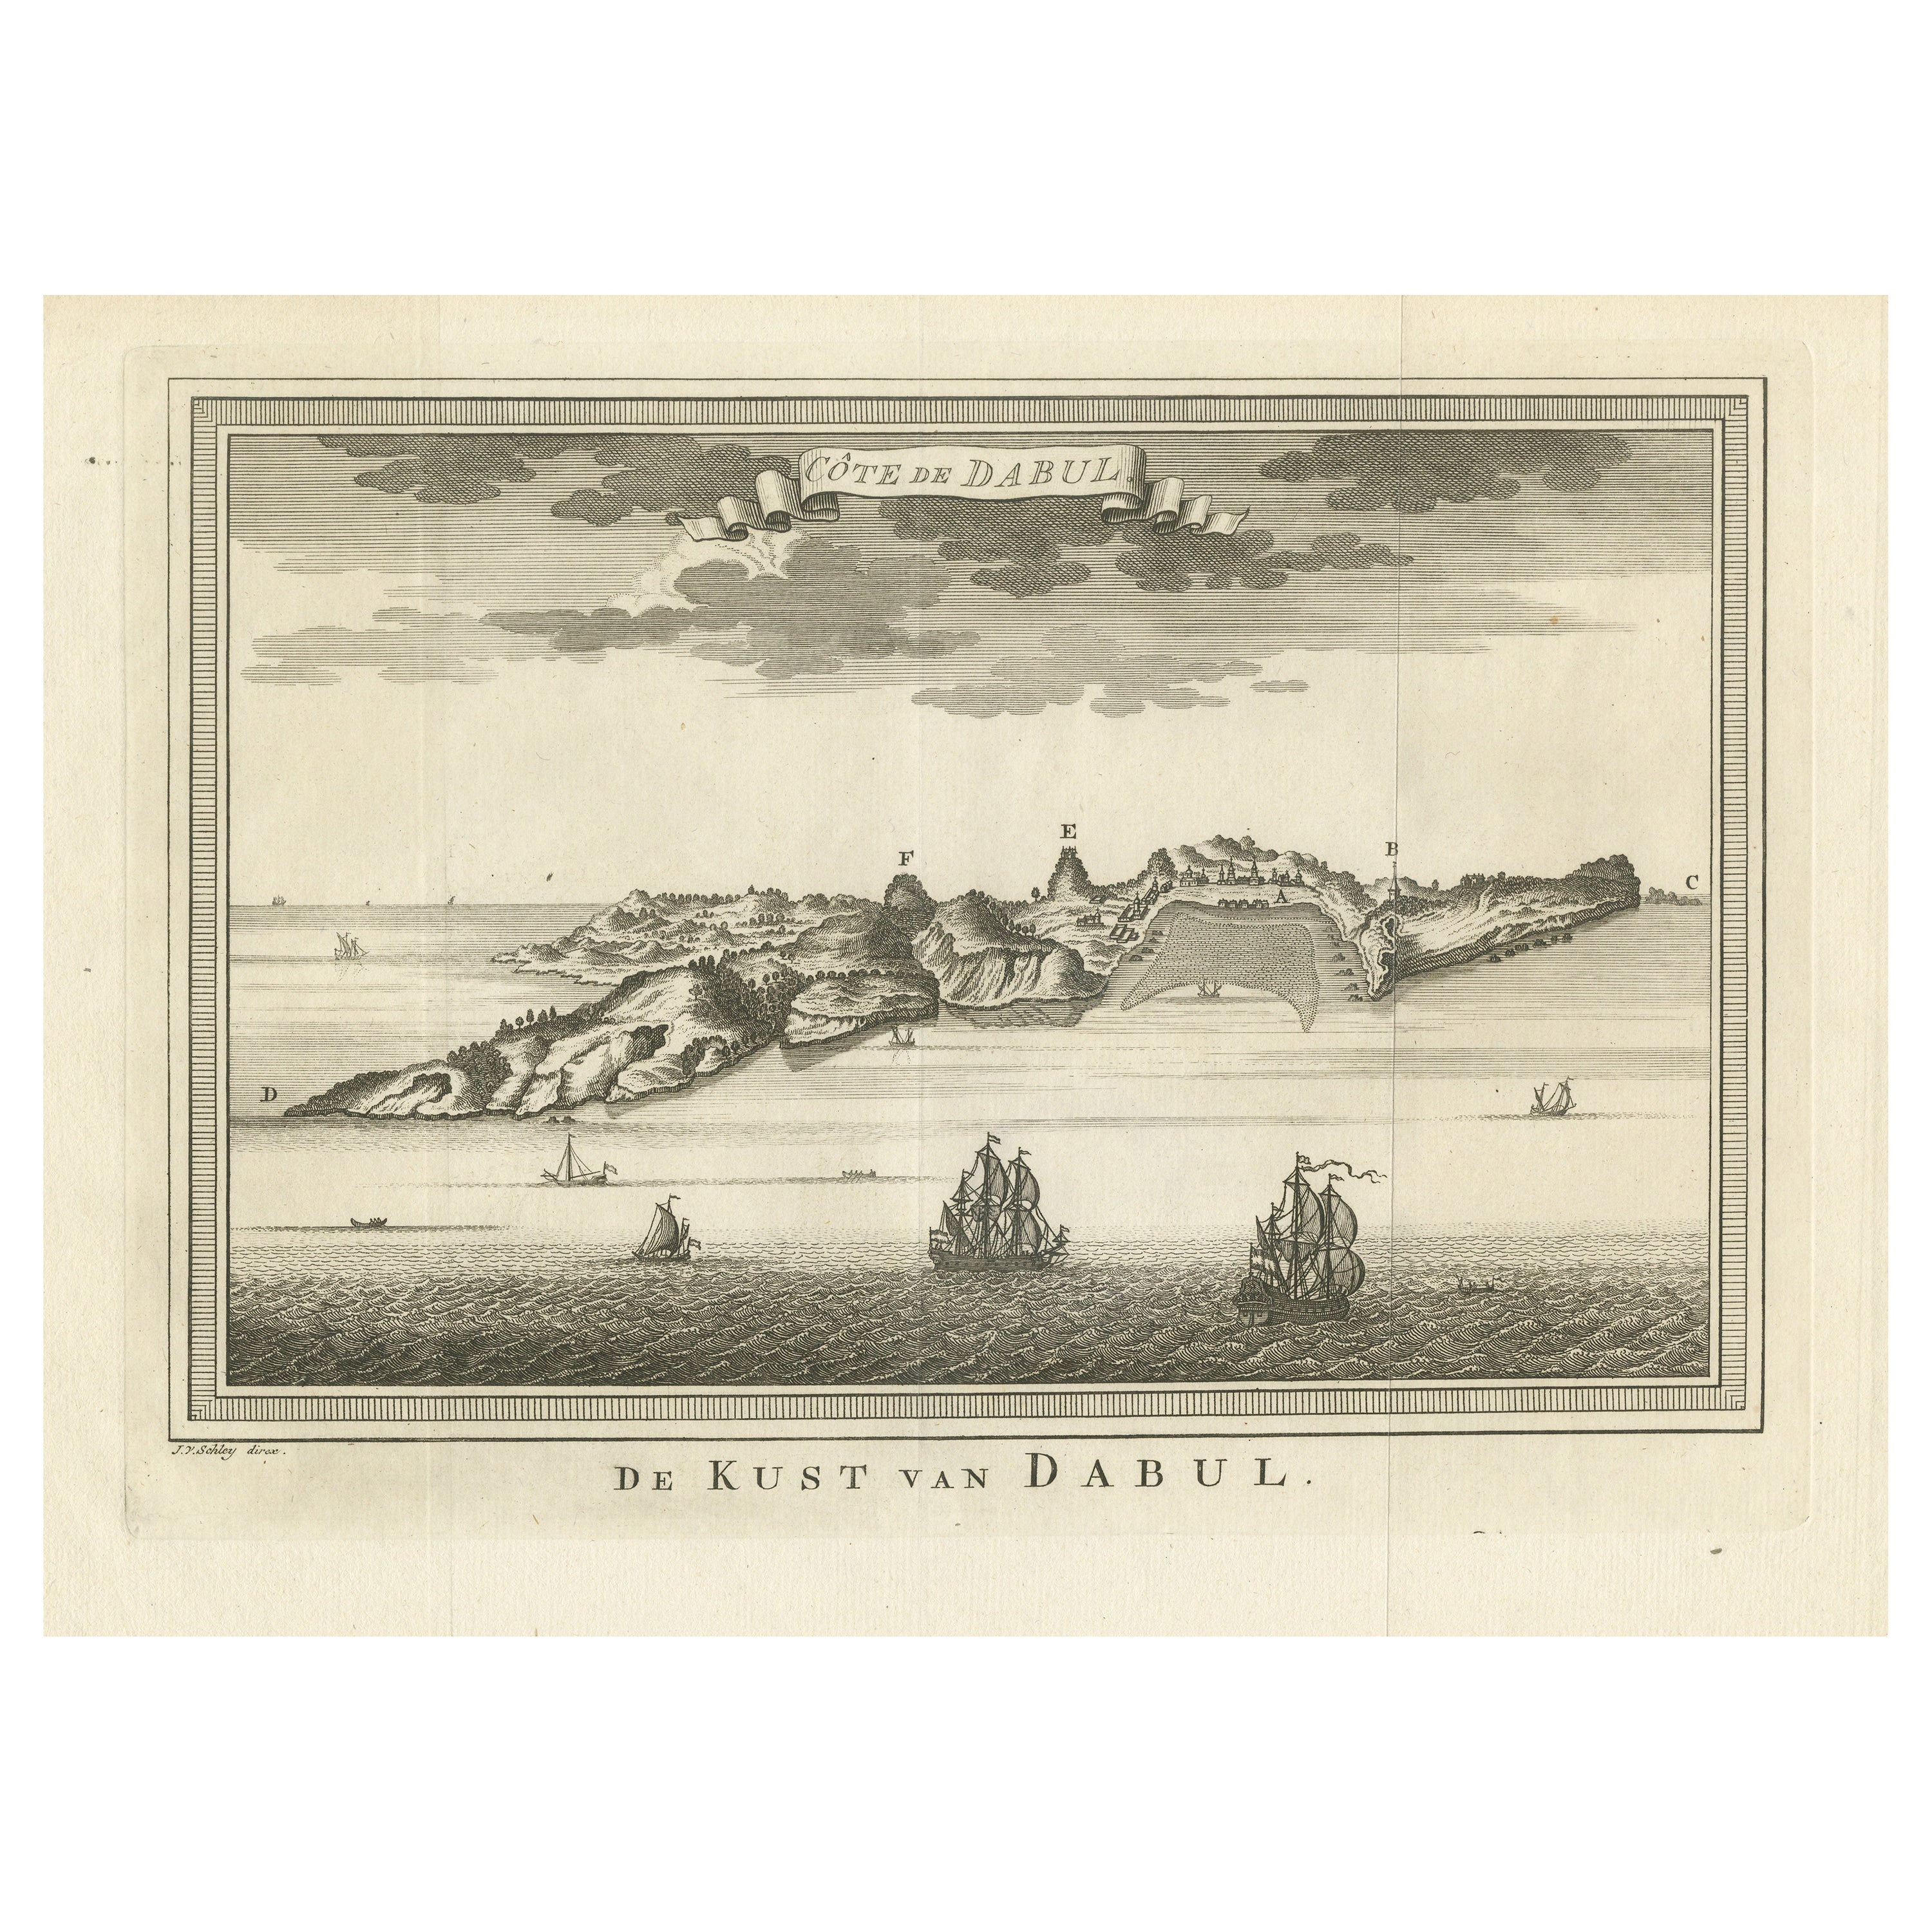 Original Antique Print of the Coast of Dabhol, Dabul, India